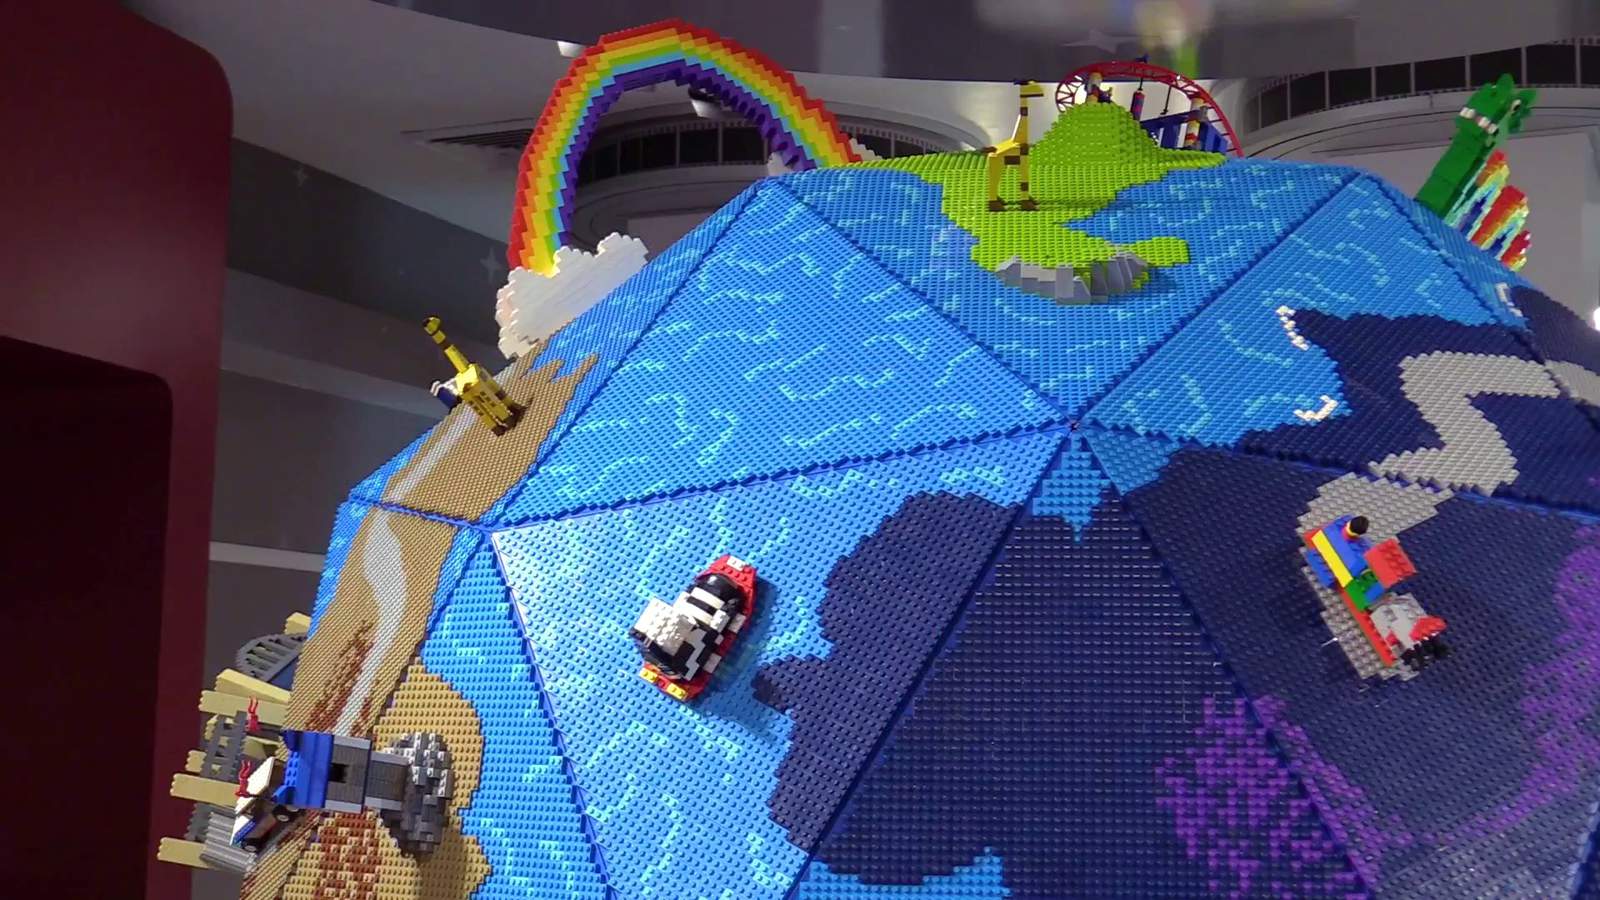 Rebuild the world at Legoland’s new ‘Planet Legoland’ experience